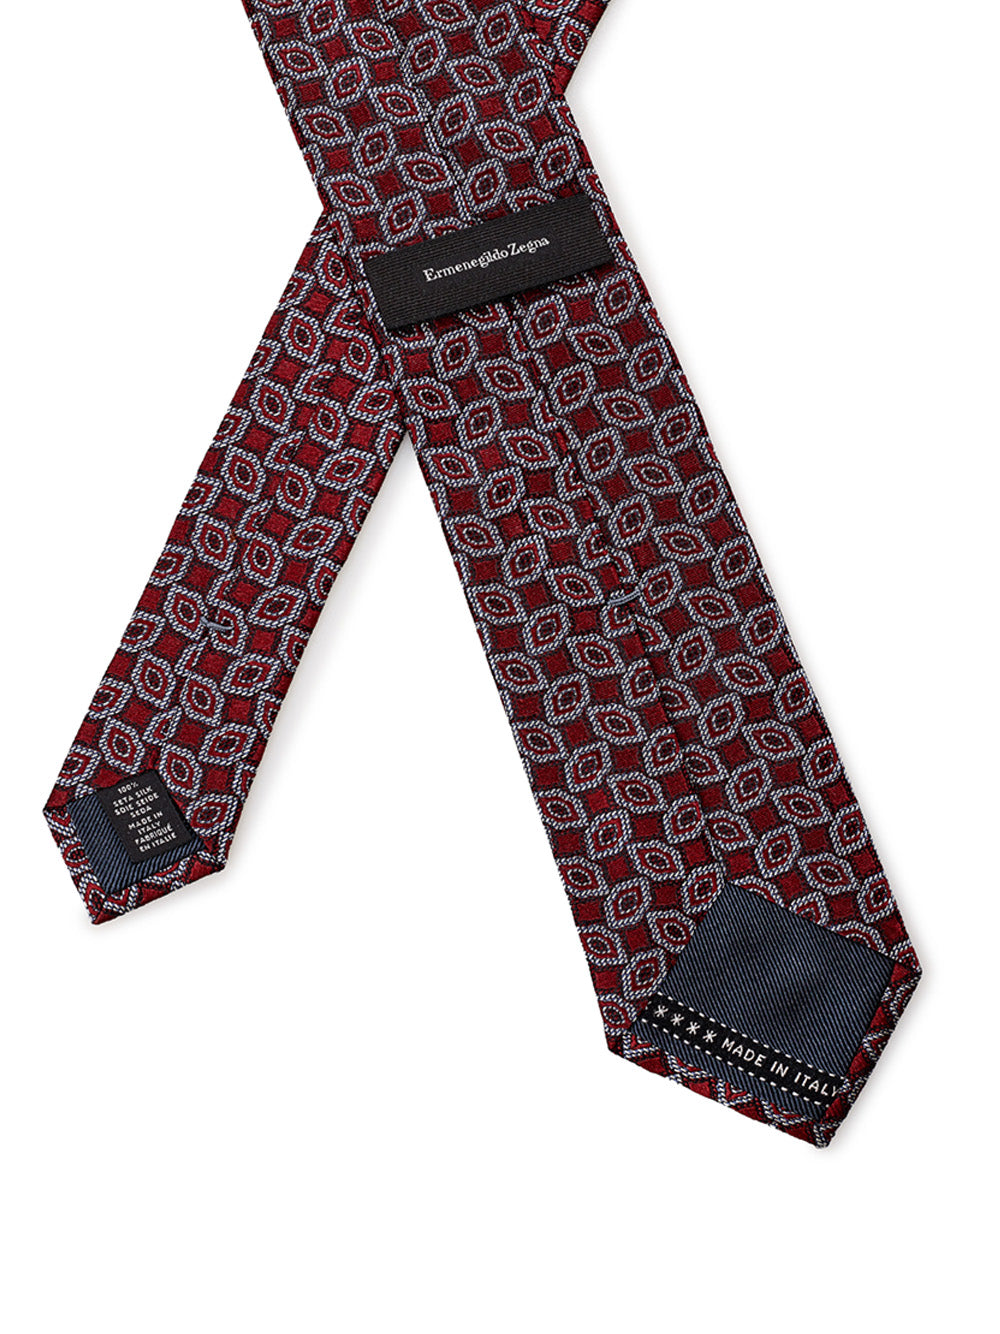 Ermenegildo Zegna Elegant Silk Tie in Dark Red